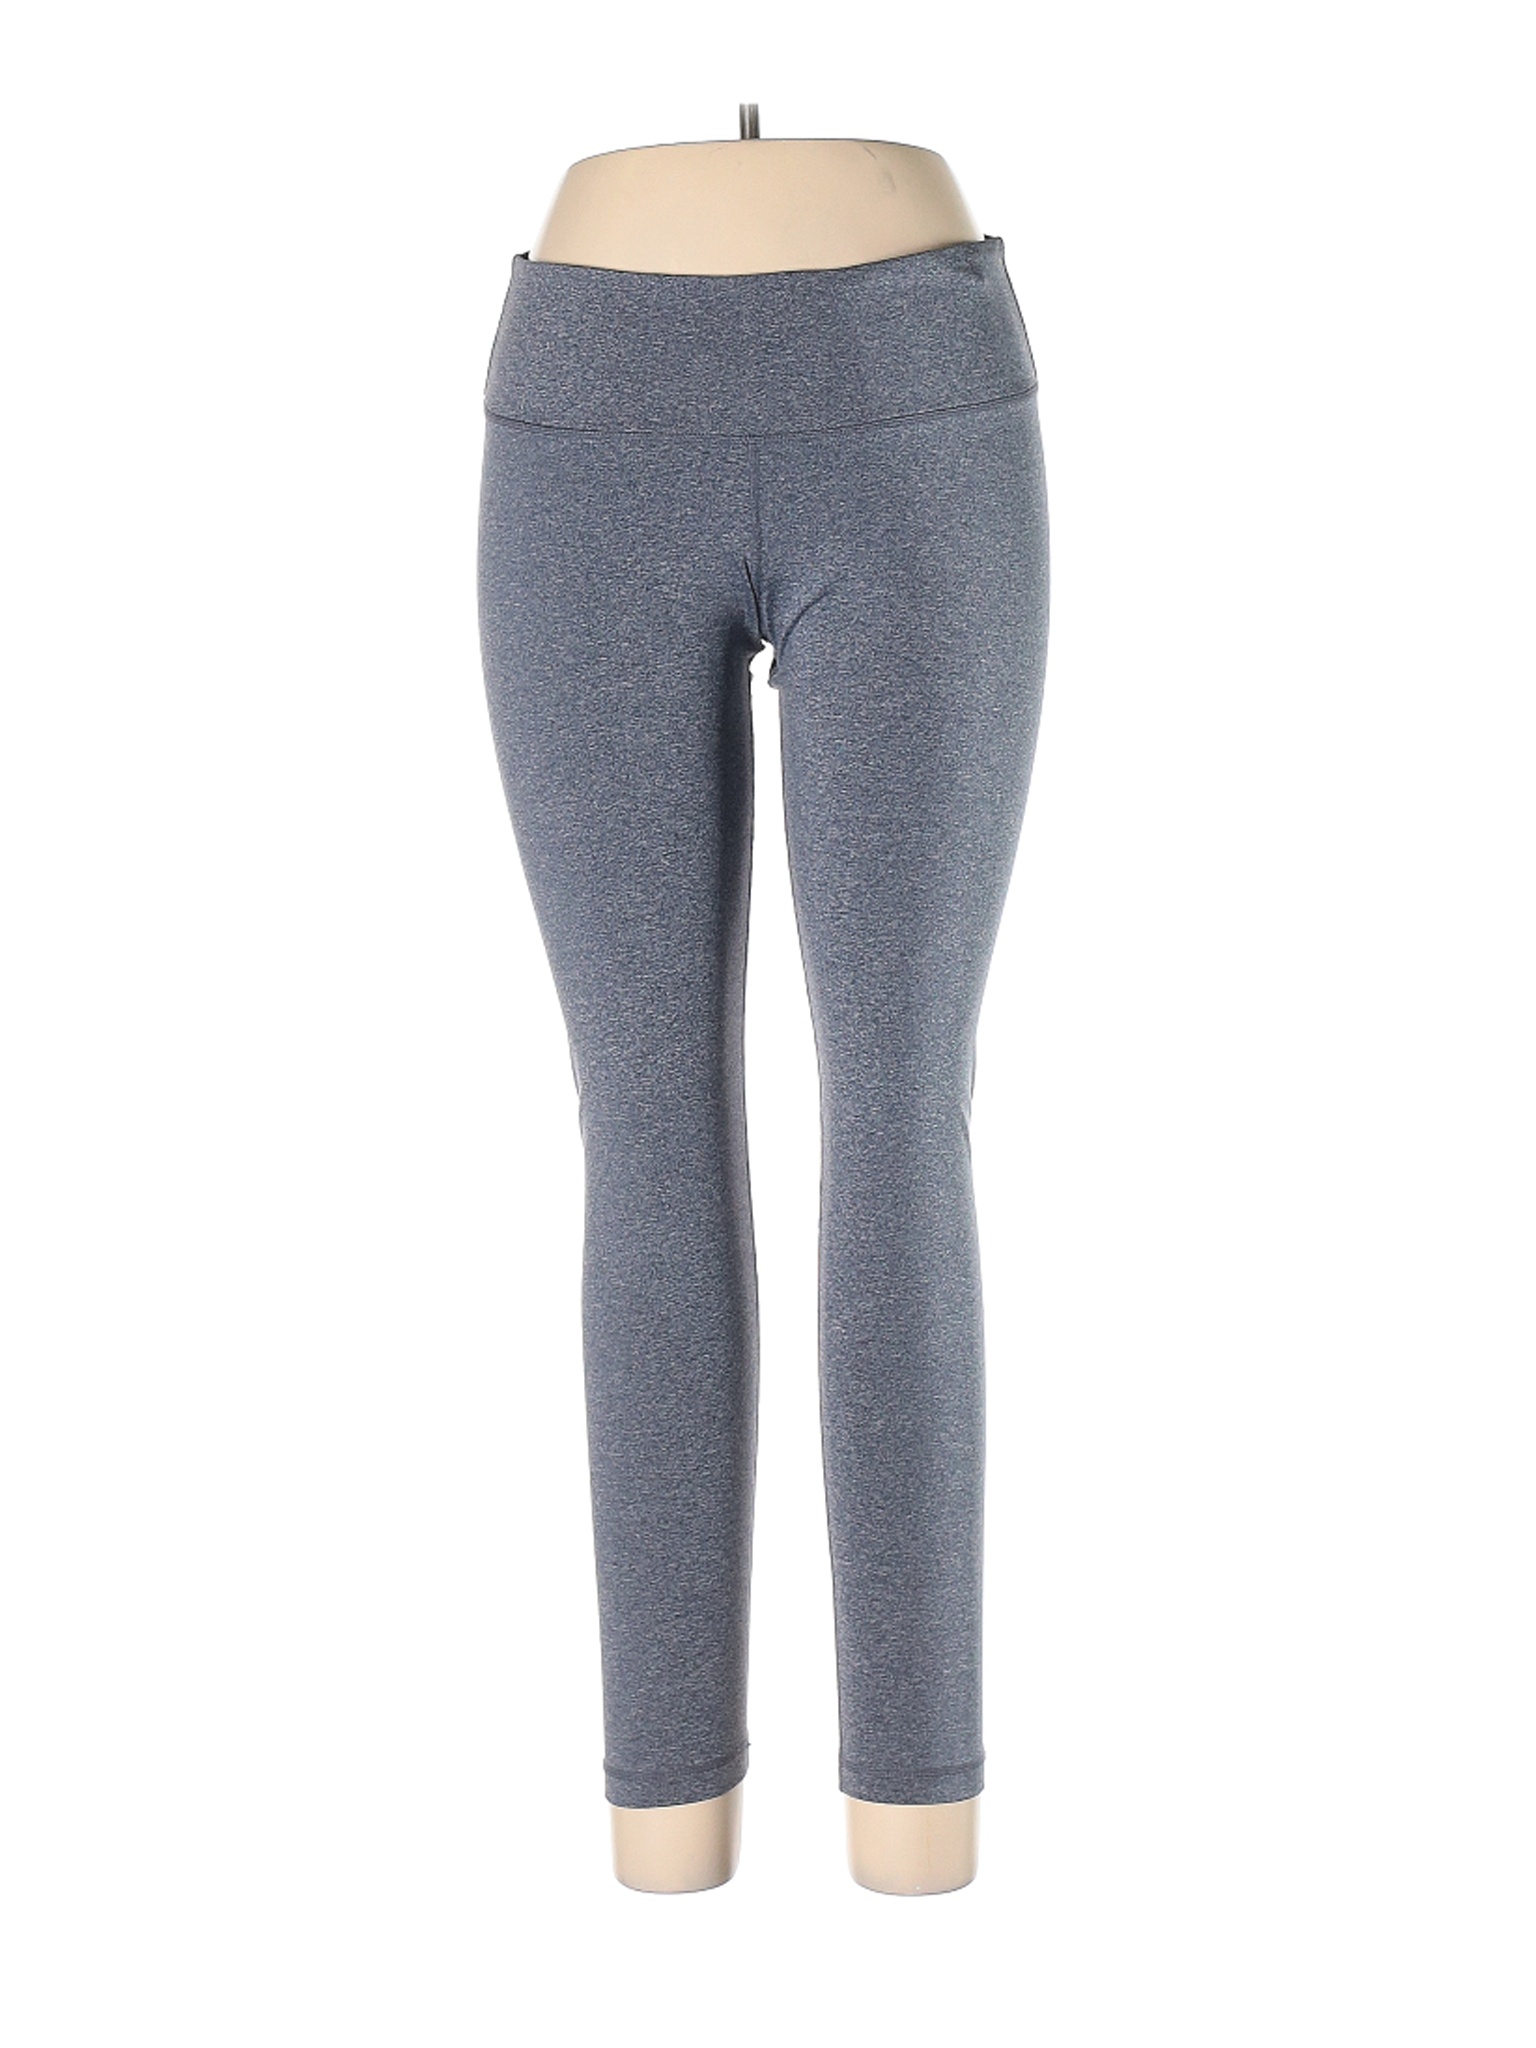 90 Degree by Reflex Women Gray Active Pants L | eBay